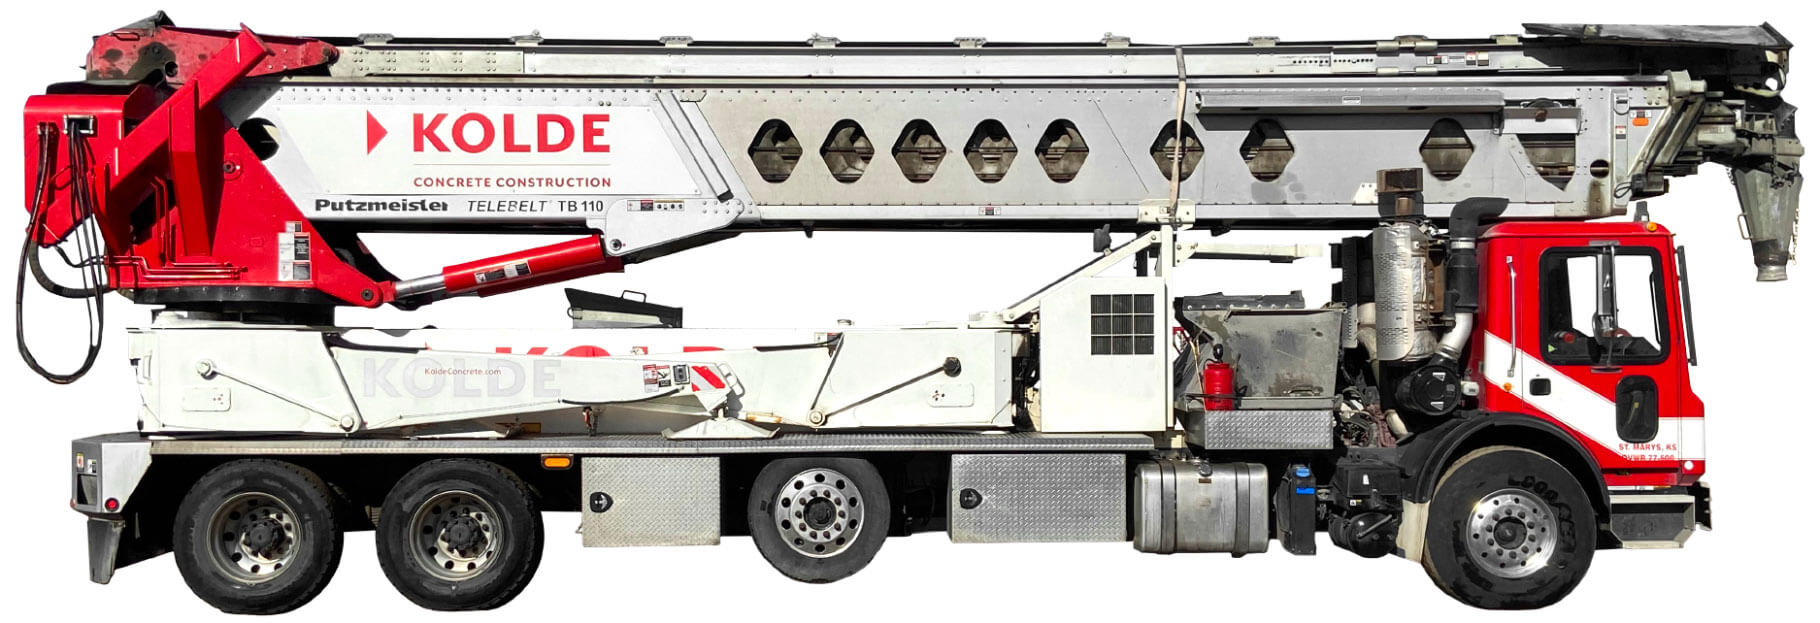 Kolde Equipment - Putzmeister 110 Telebelt Truck